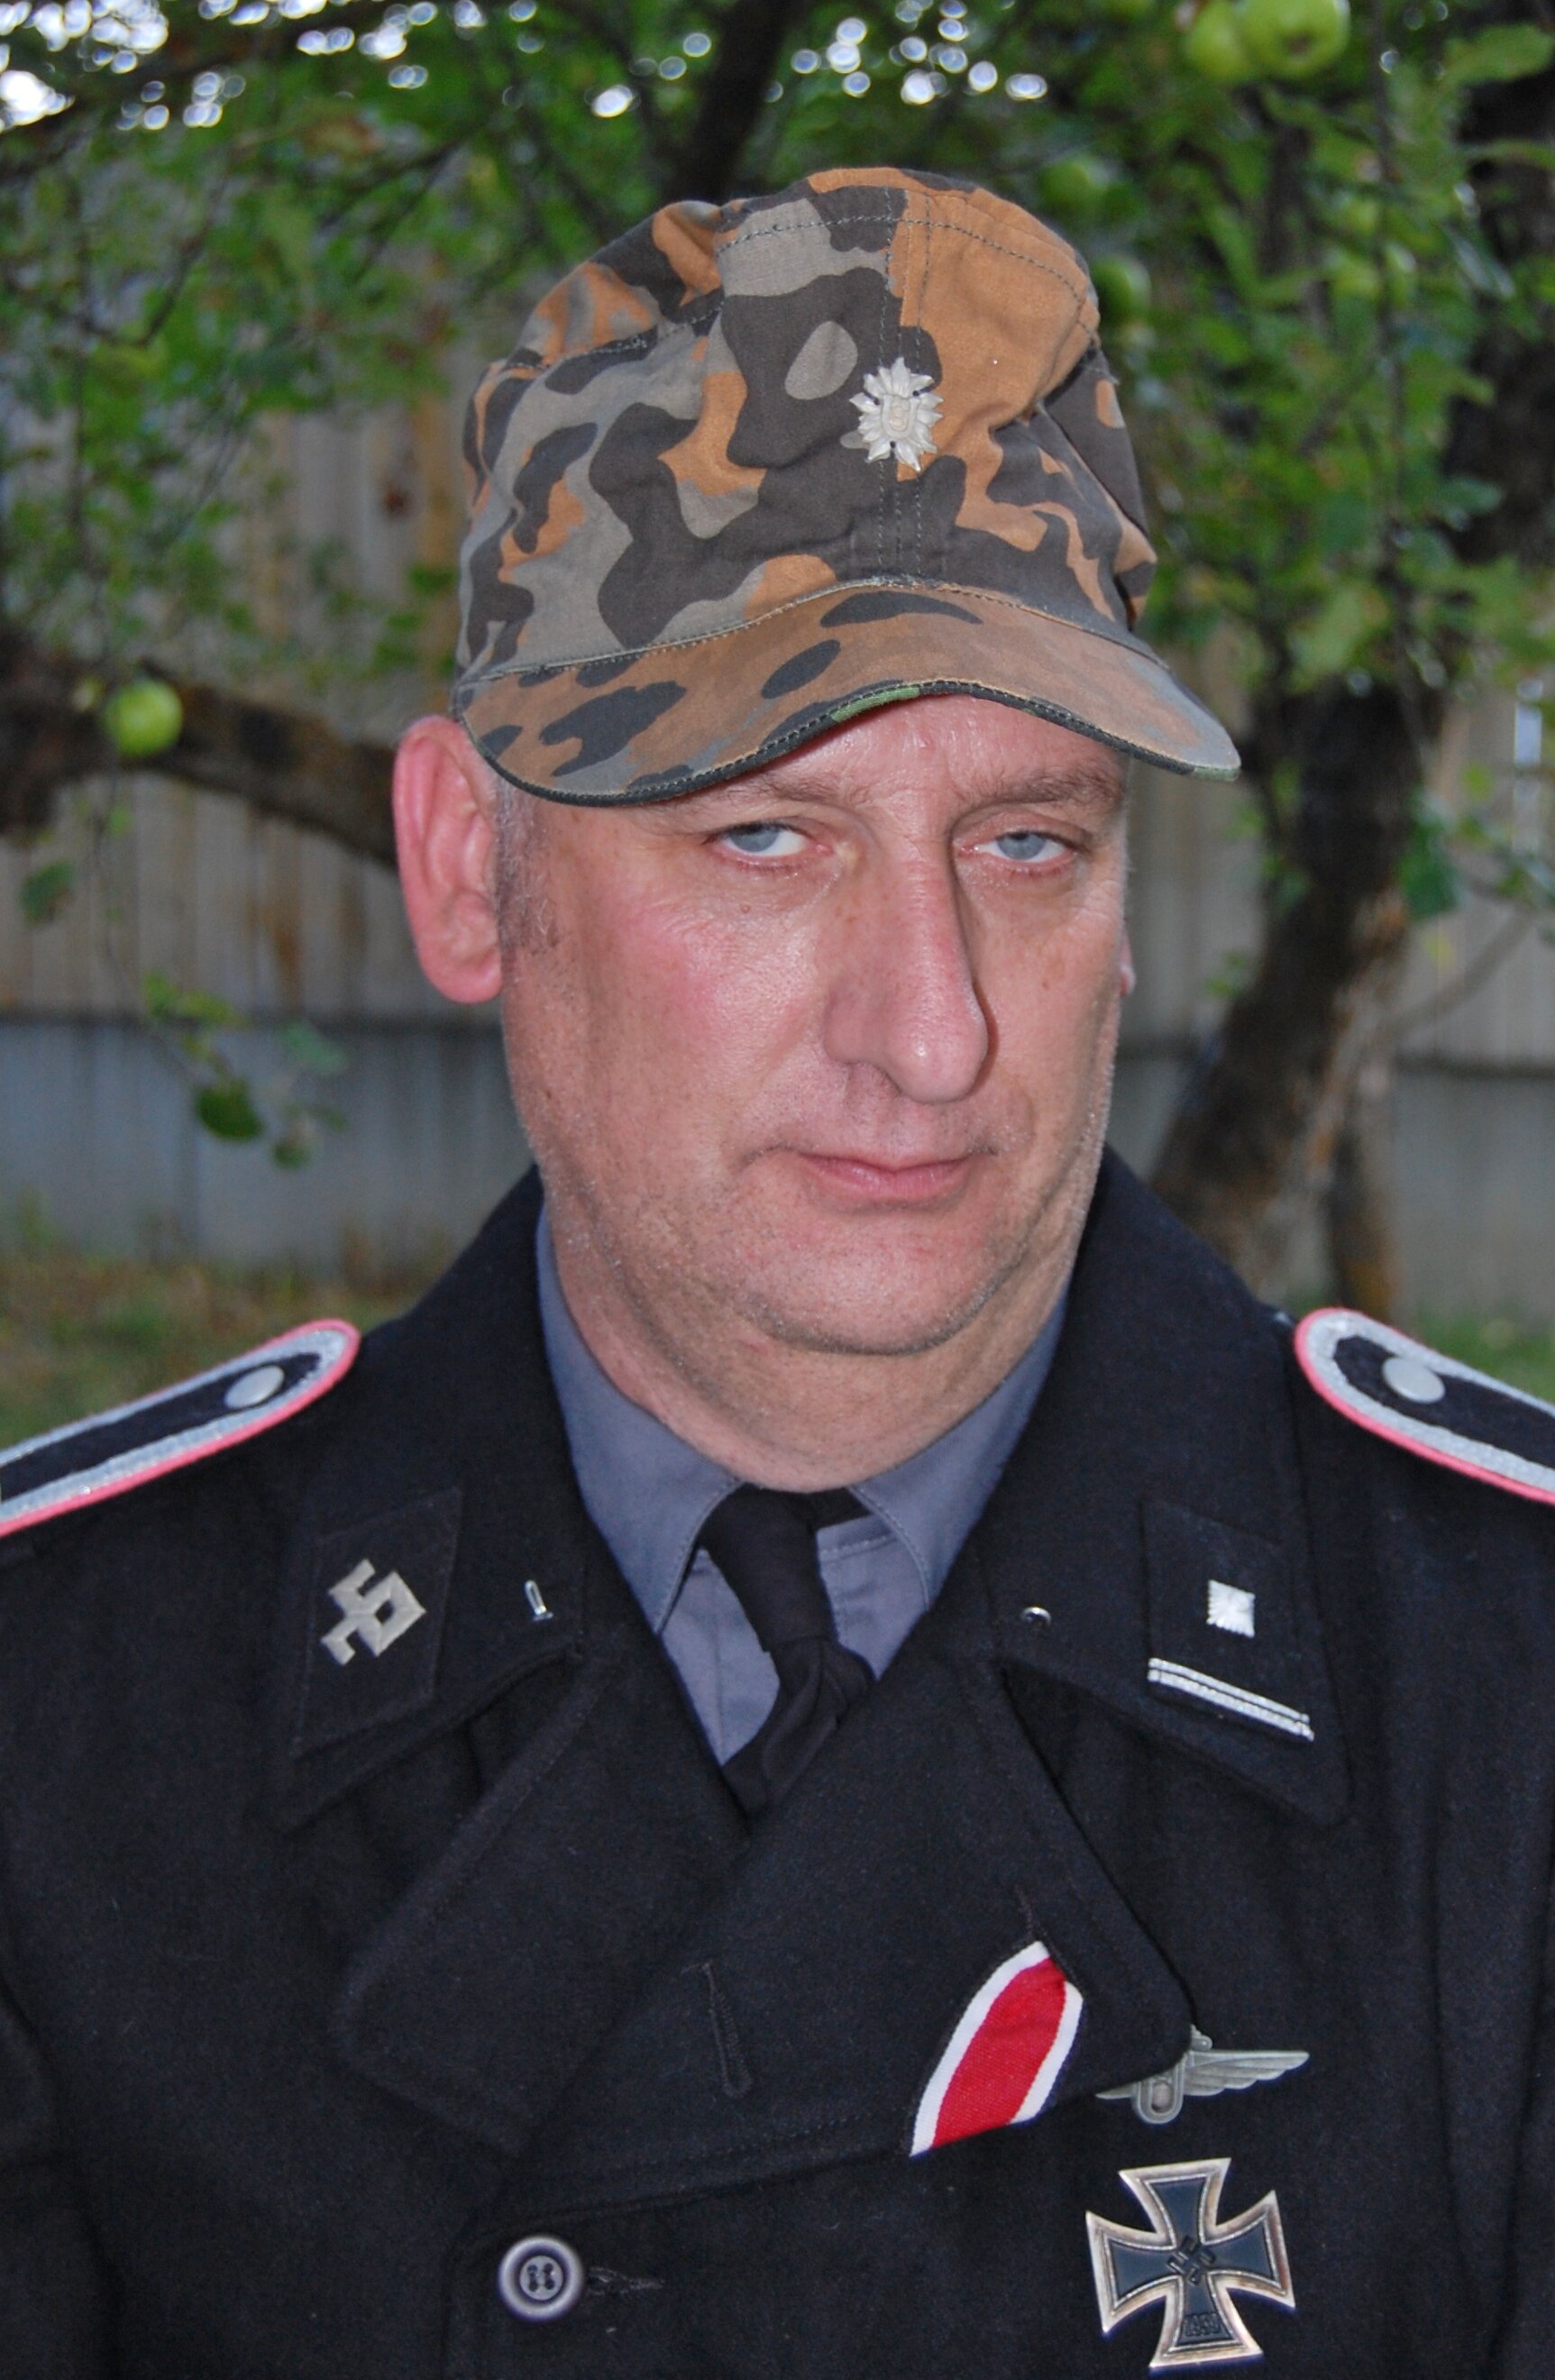 Prinz Eugan Pz. Officer (26).JPG